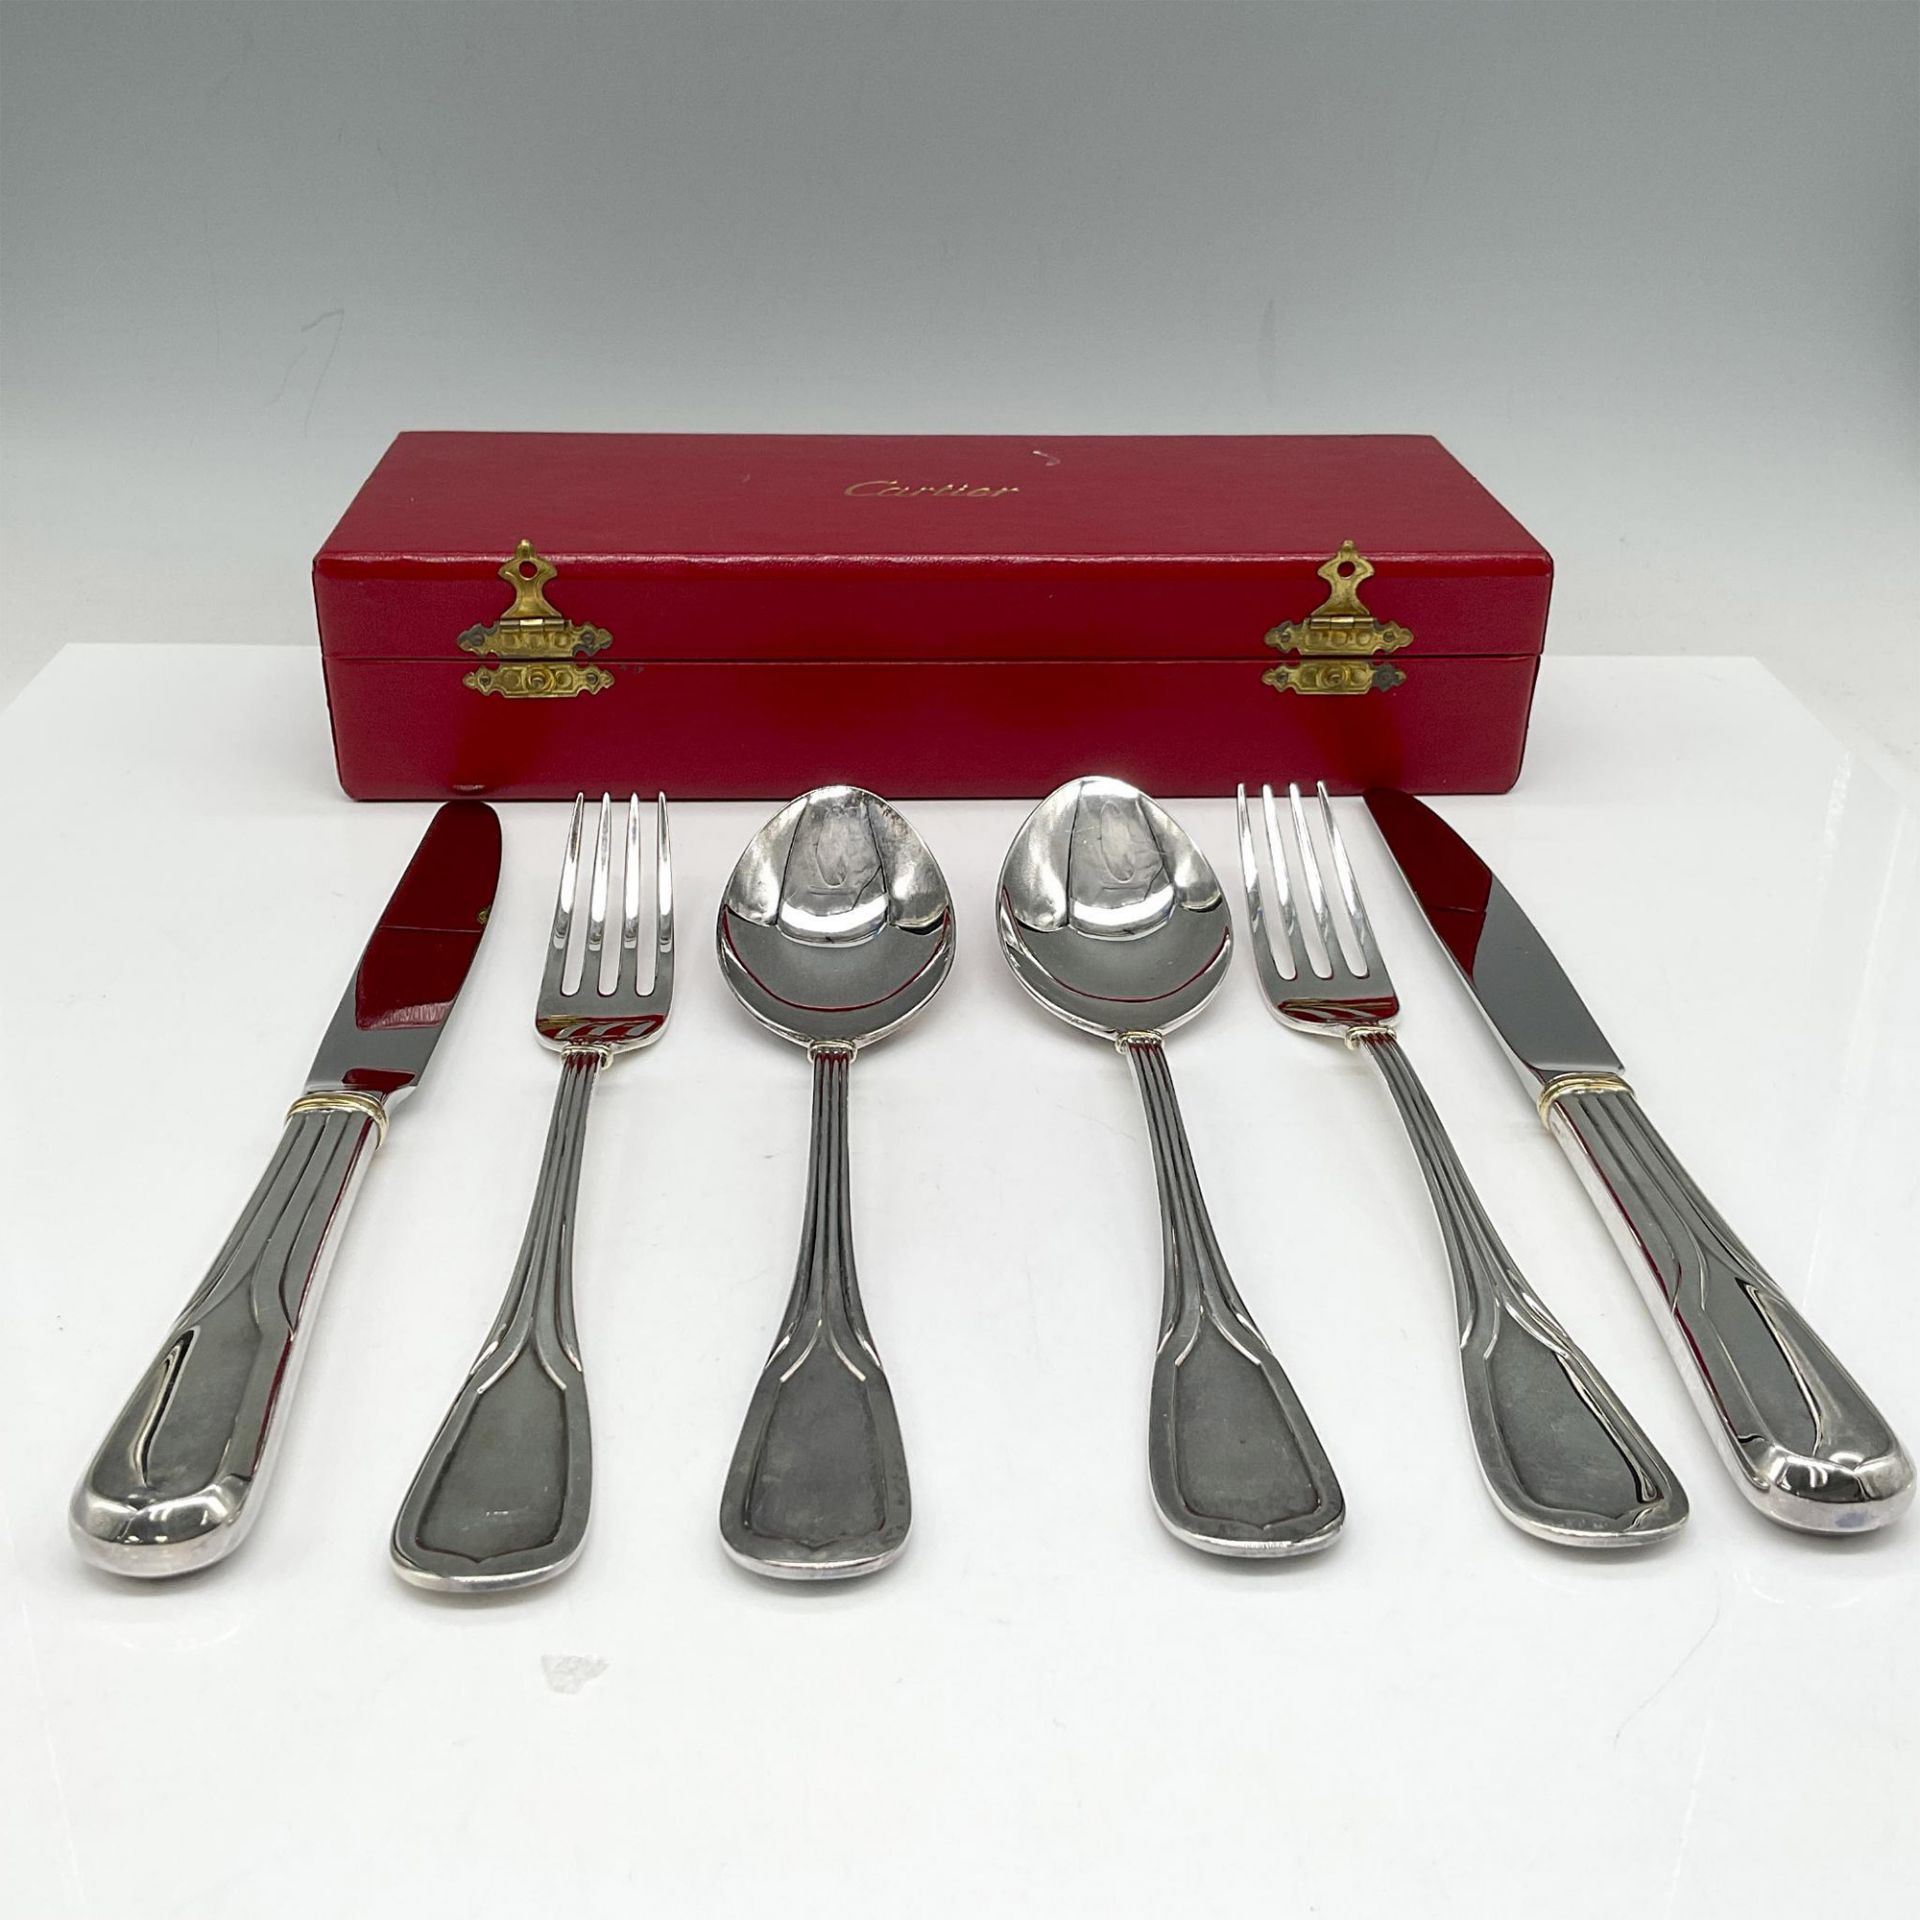 Cartier Sterling Silver Serving Utensils, Set of 6 - Image 2 of 4